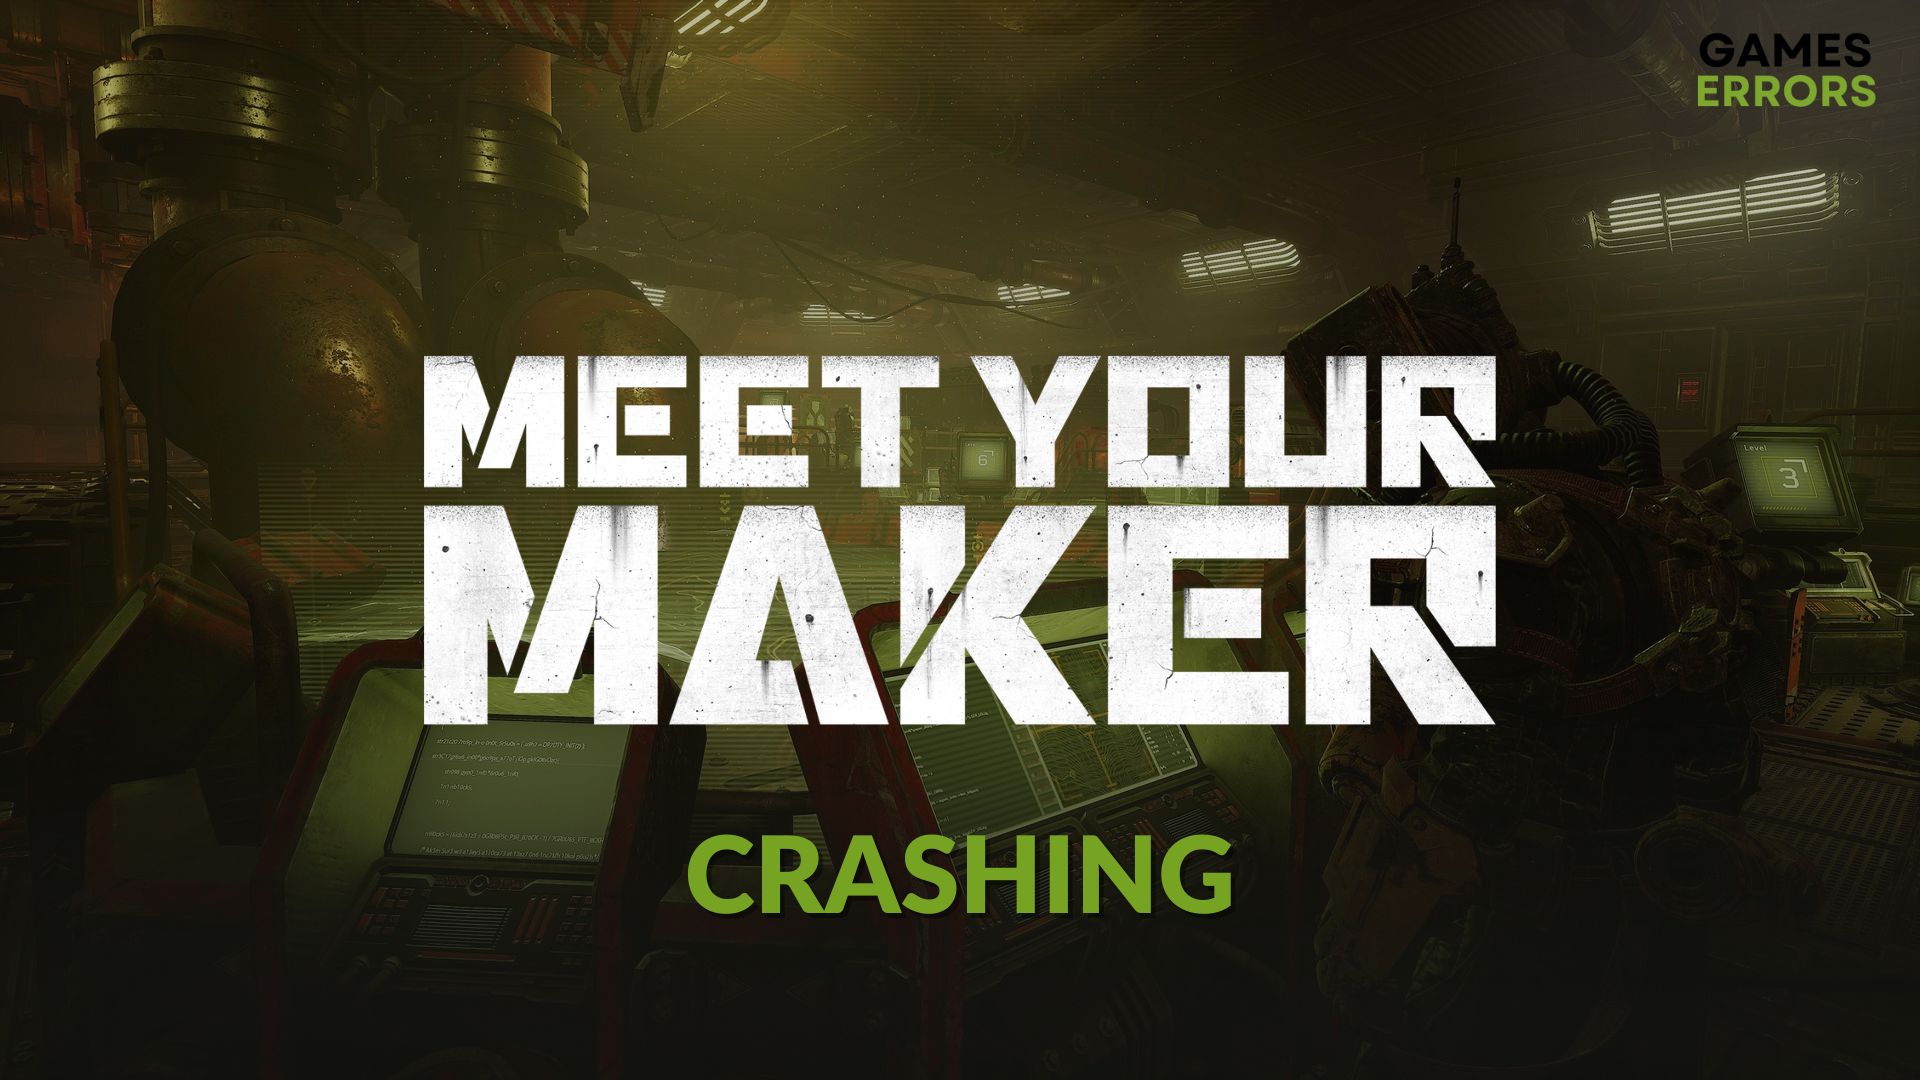 How to fix Meet your maker crashing pc